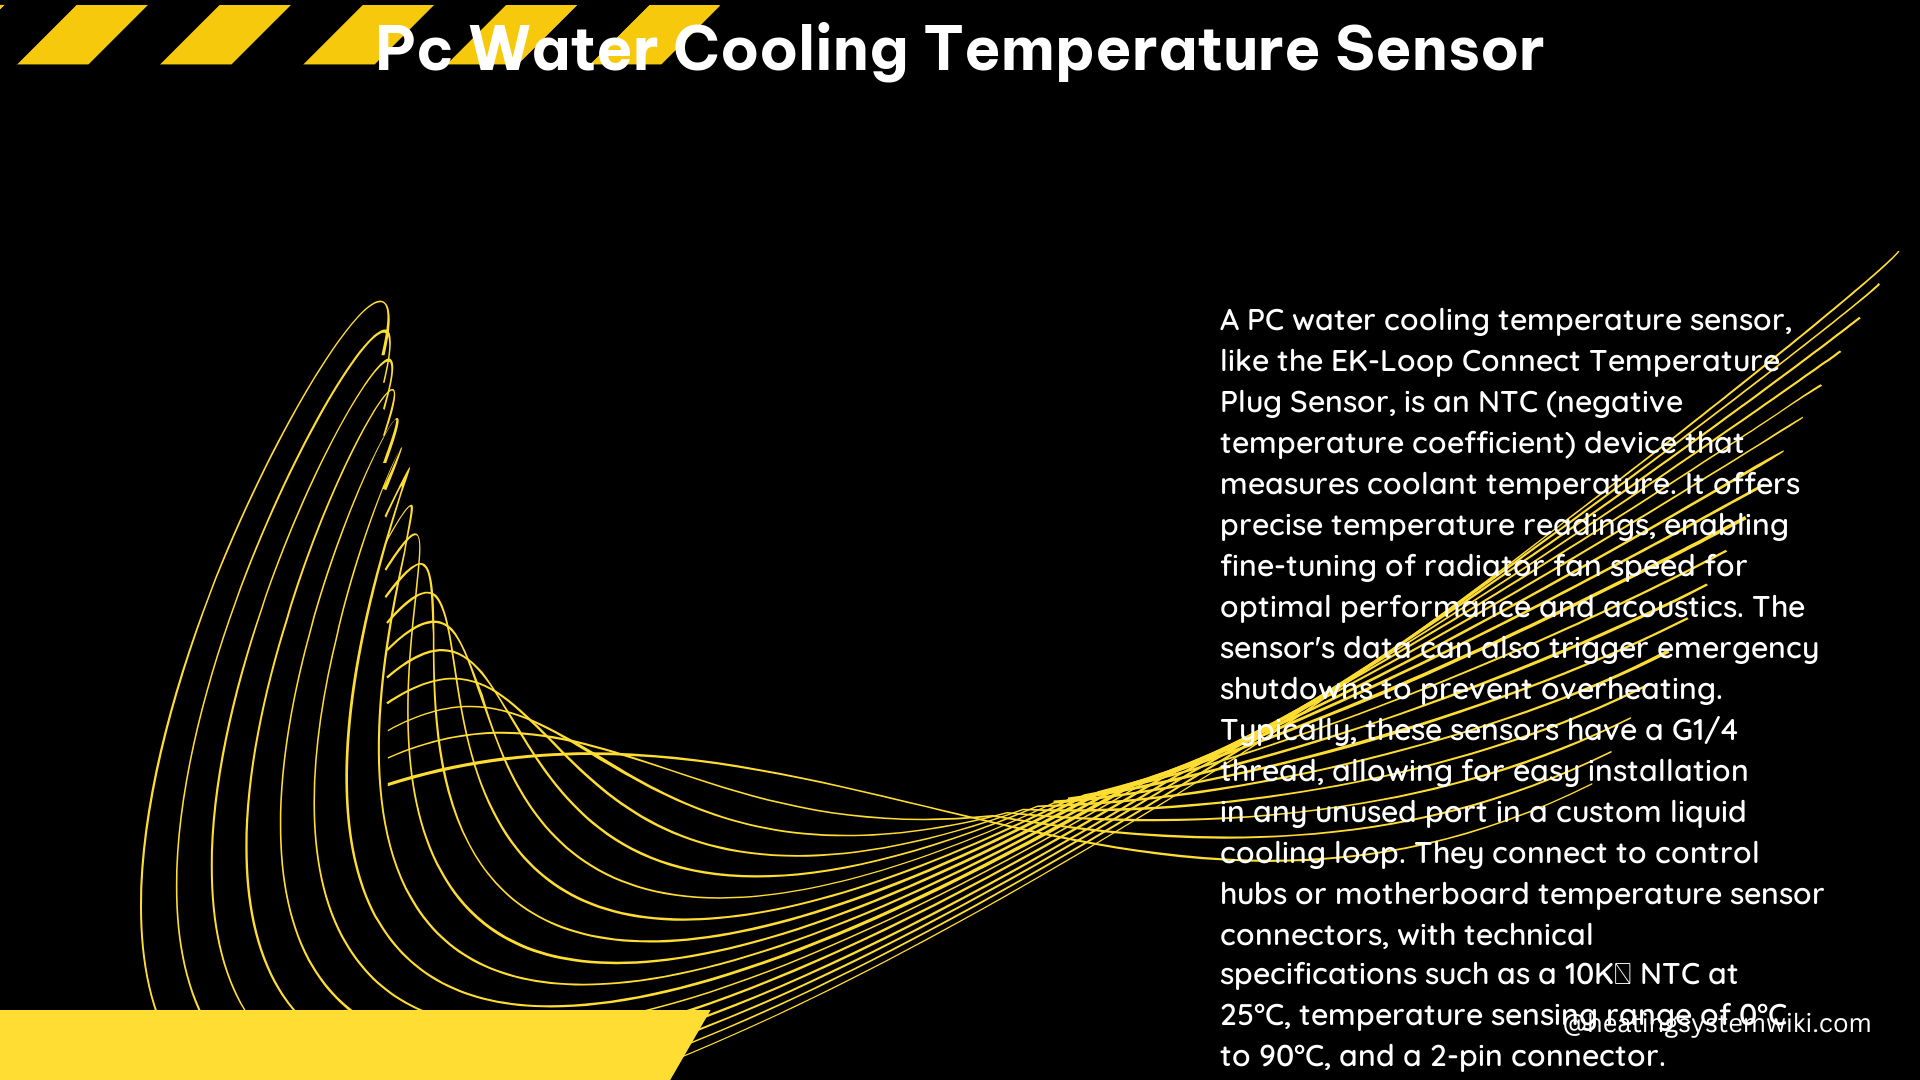 PC Water Cooling Temperature Sensor